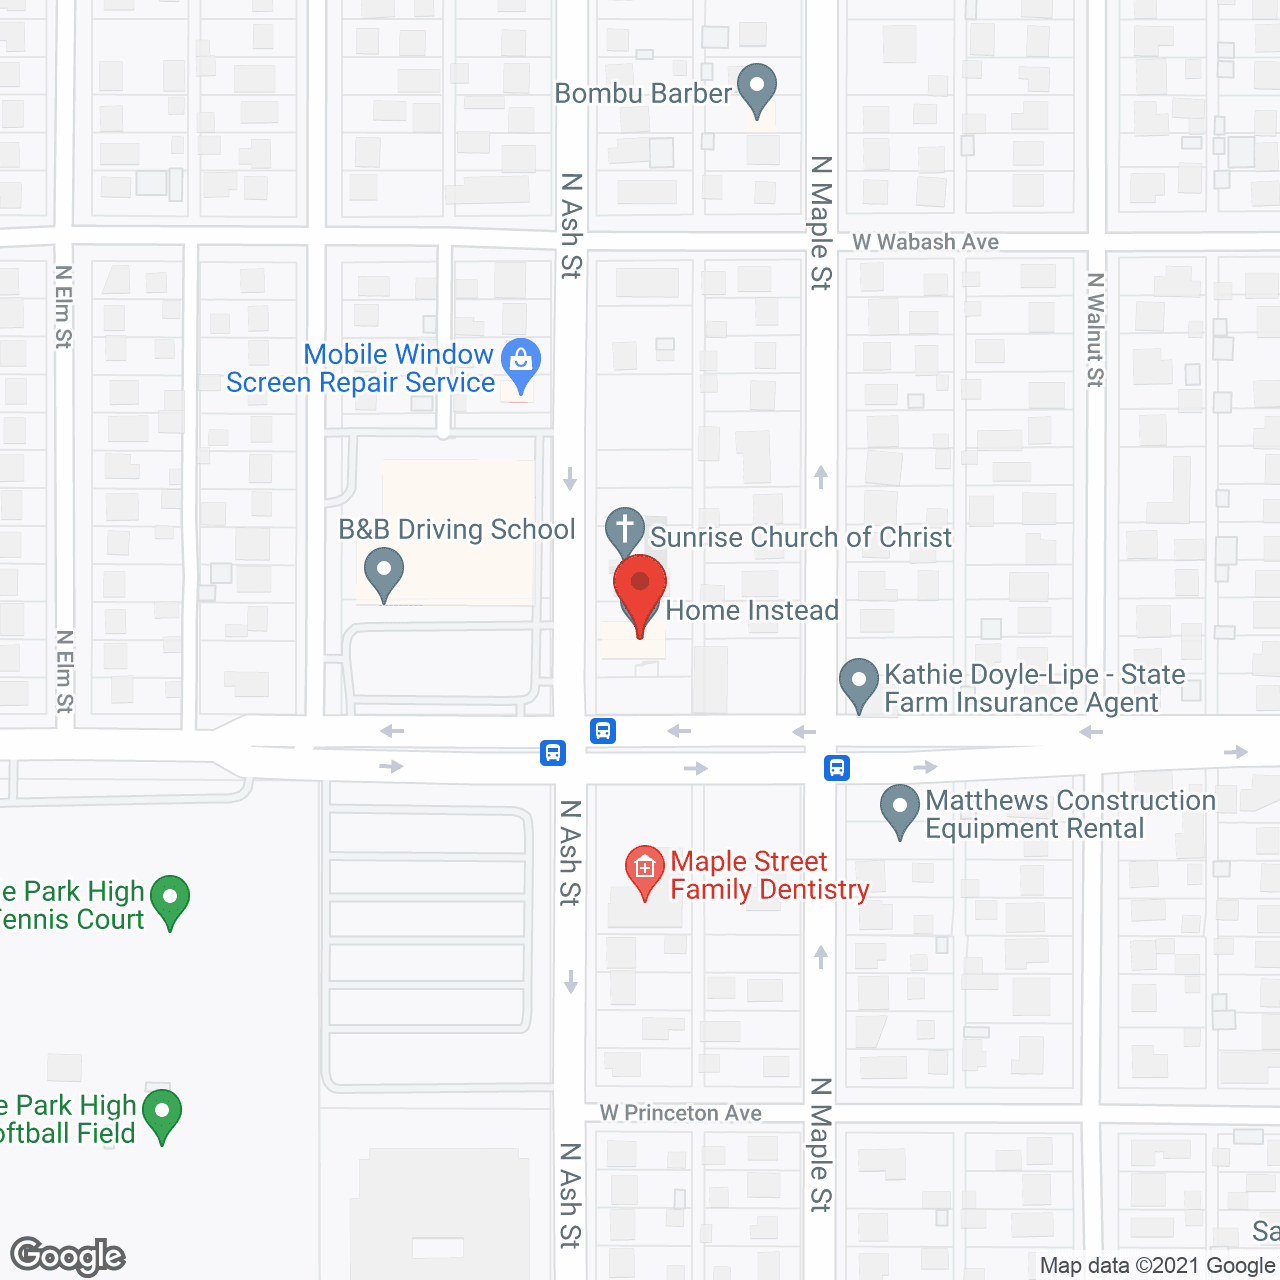 Home Instead - Spokane, WA in google map